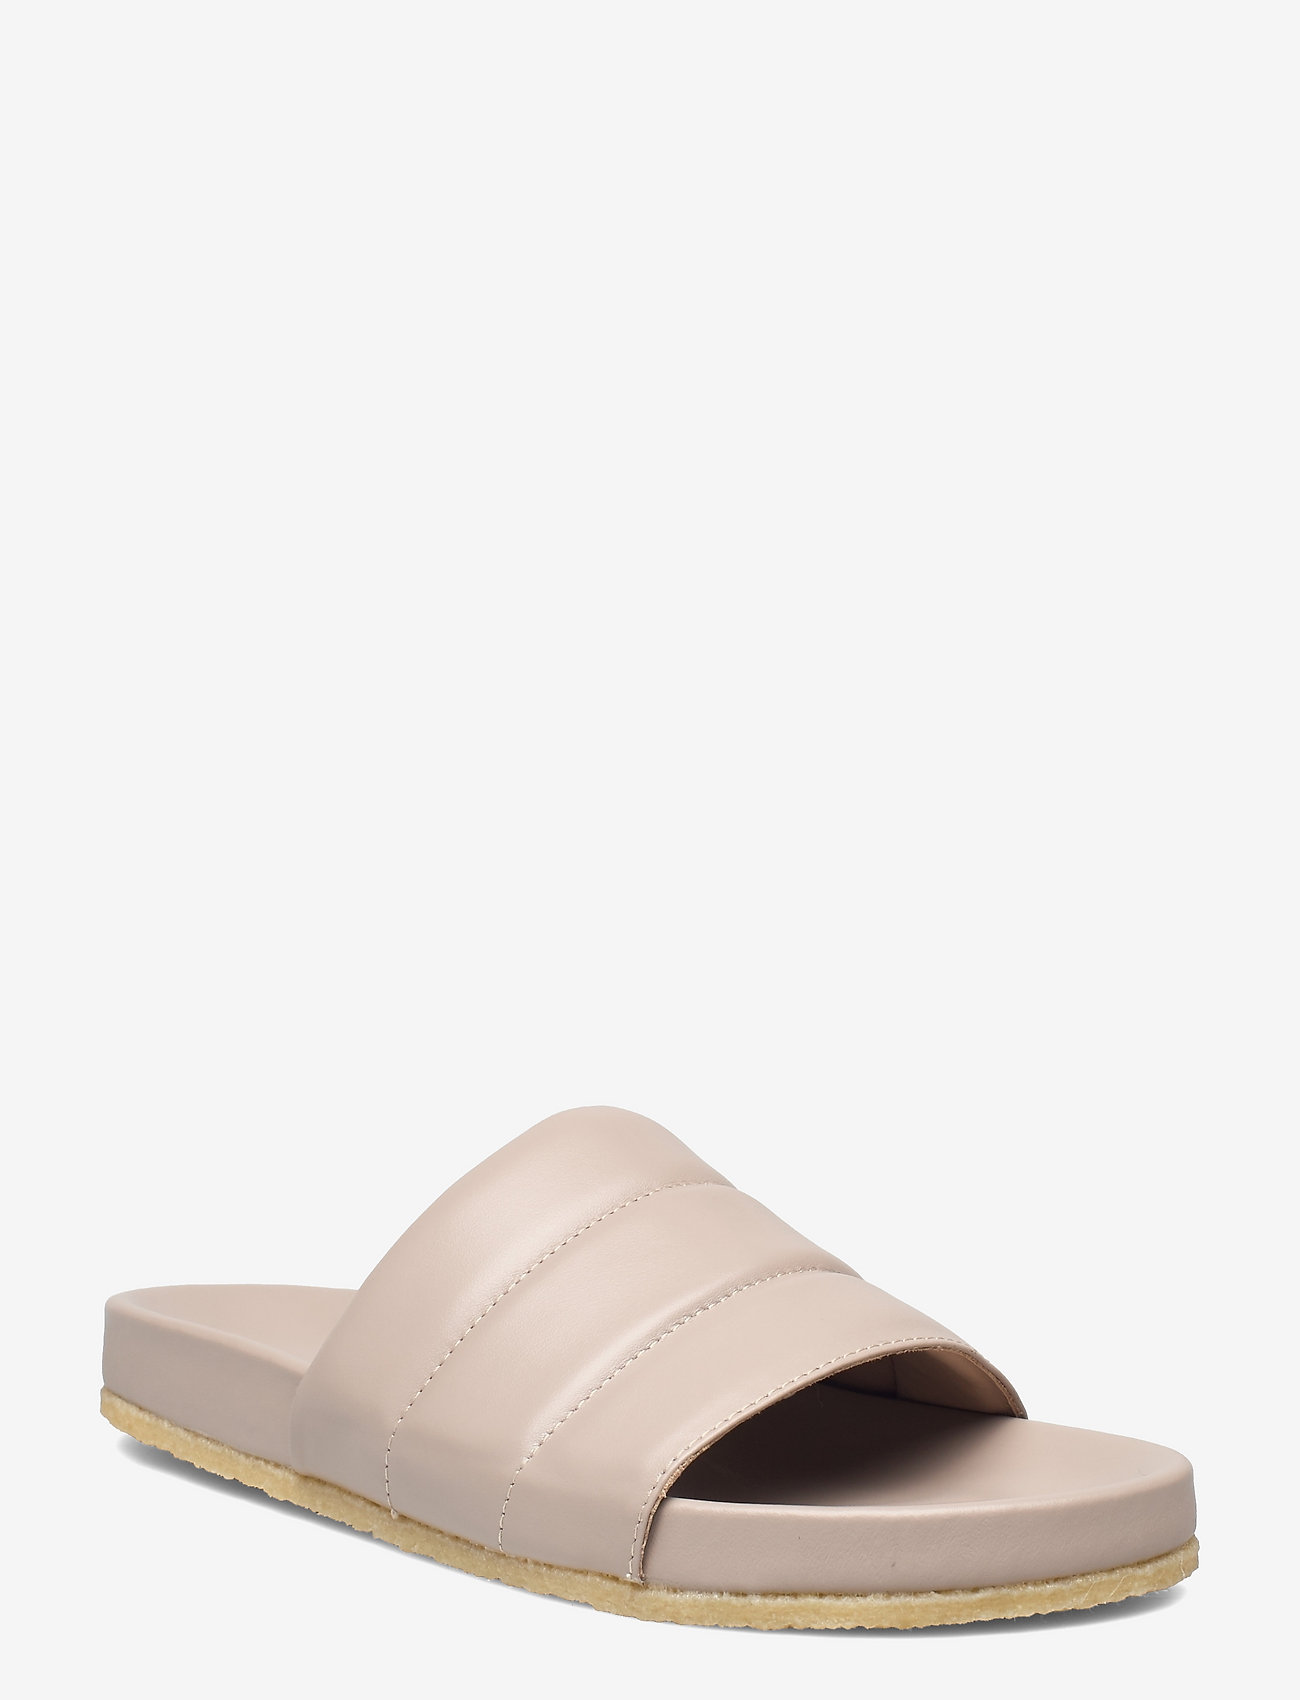 ANGULUS - Sandals - flat - open toe - op - flat sandals - 1501 light beige - 0